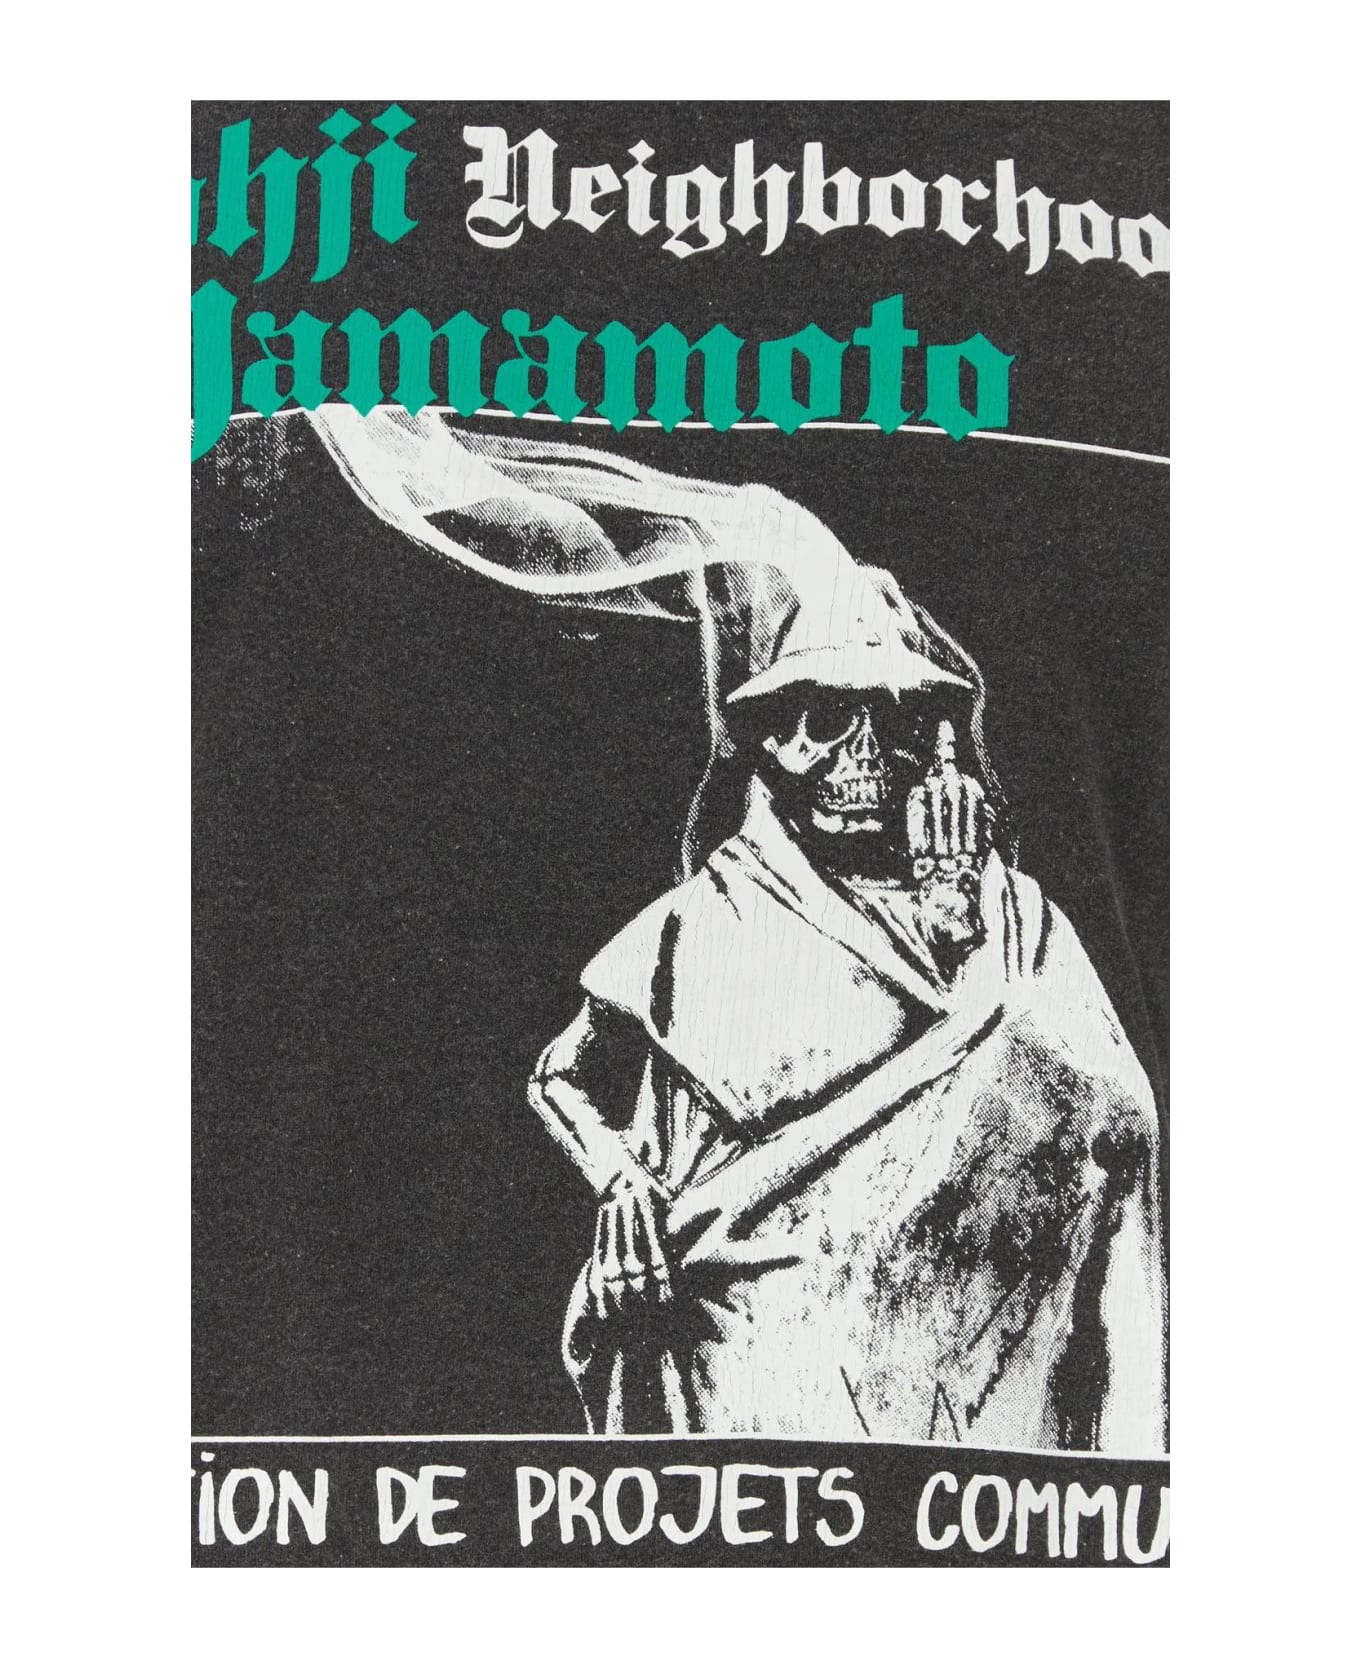 Yohji Yamamoto Dark Grey Cotton Yohji Yamamoto X Neighborhood T-shirt - Black